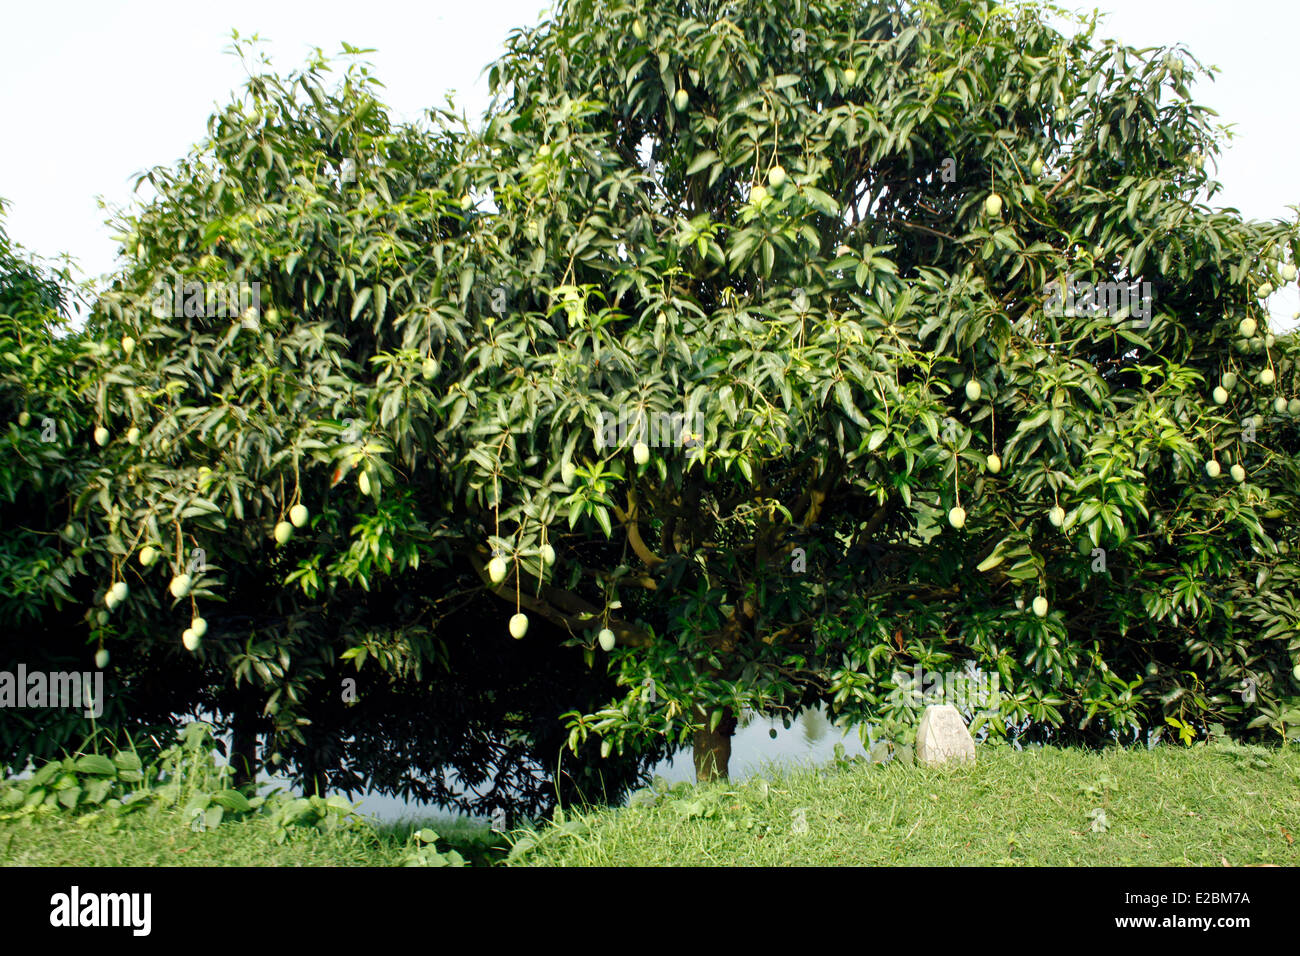 Chapainawabganj, Bangladesh, 17th June, 2014. Chapainawabganj, Bangladesh, 17th June, 2014. Mango garden Bangladesh generally produces about 800,000 metric tons of mangoes on 51,000 hectors of land. Chapainawabganj alone produces almost 200,000 tons of mangoes on 23,282 hectares of land. © zakir hossain chowdhury zakir/Alamy Live News Credit:  zakir hossain chowdhury zakir/Alamy Live News Stock Photo